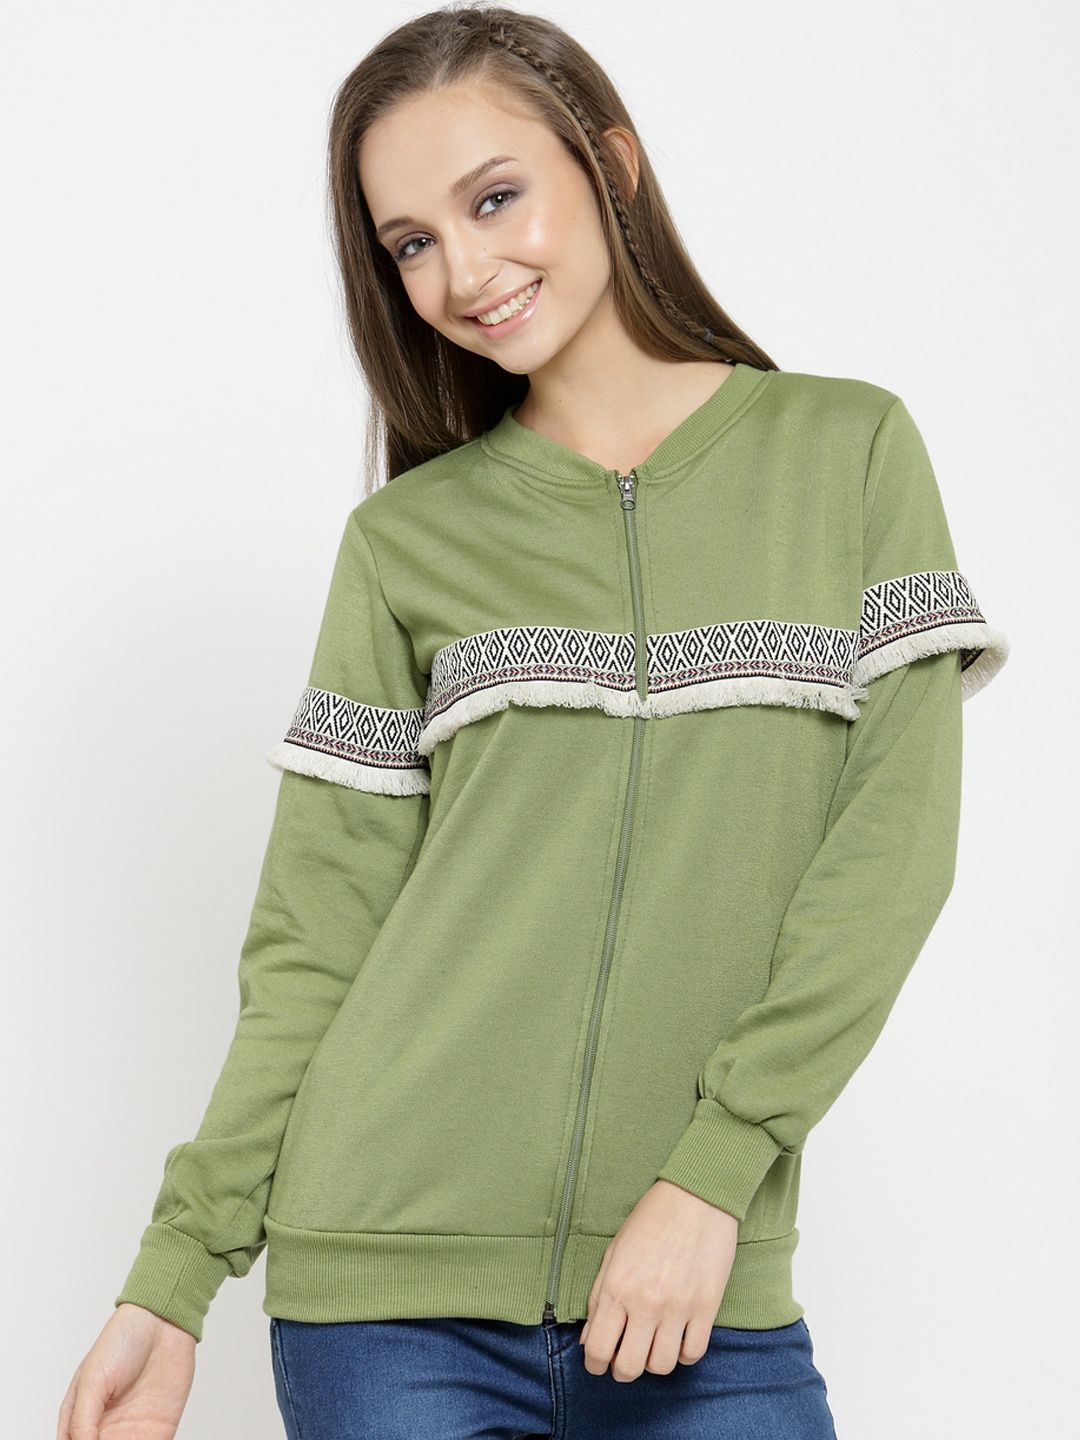 Belle Fille Women Olive Green Printed Sweatshirt Price in India